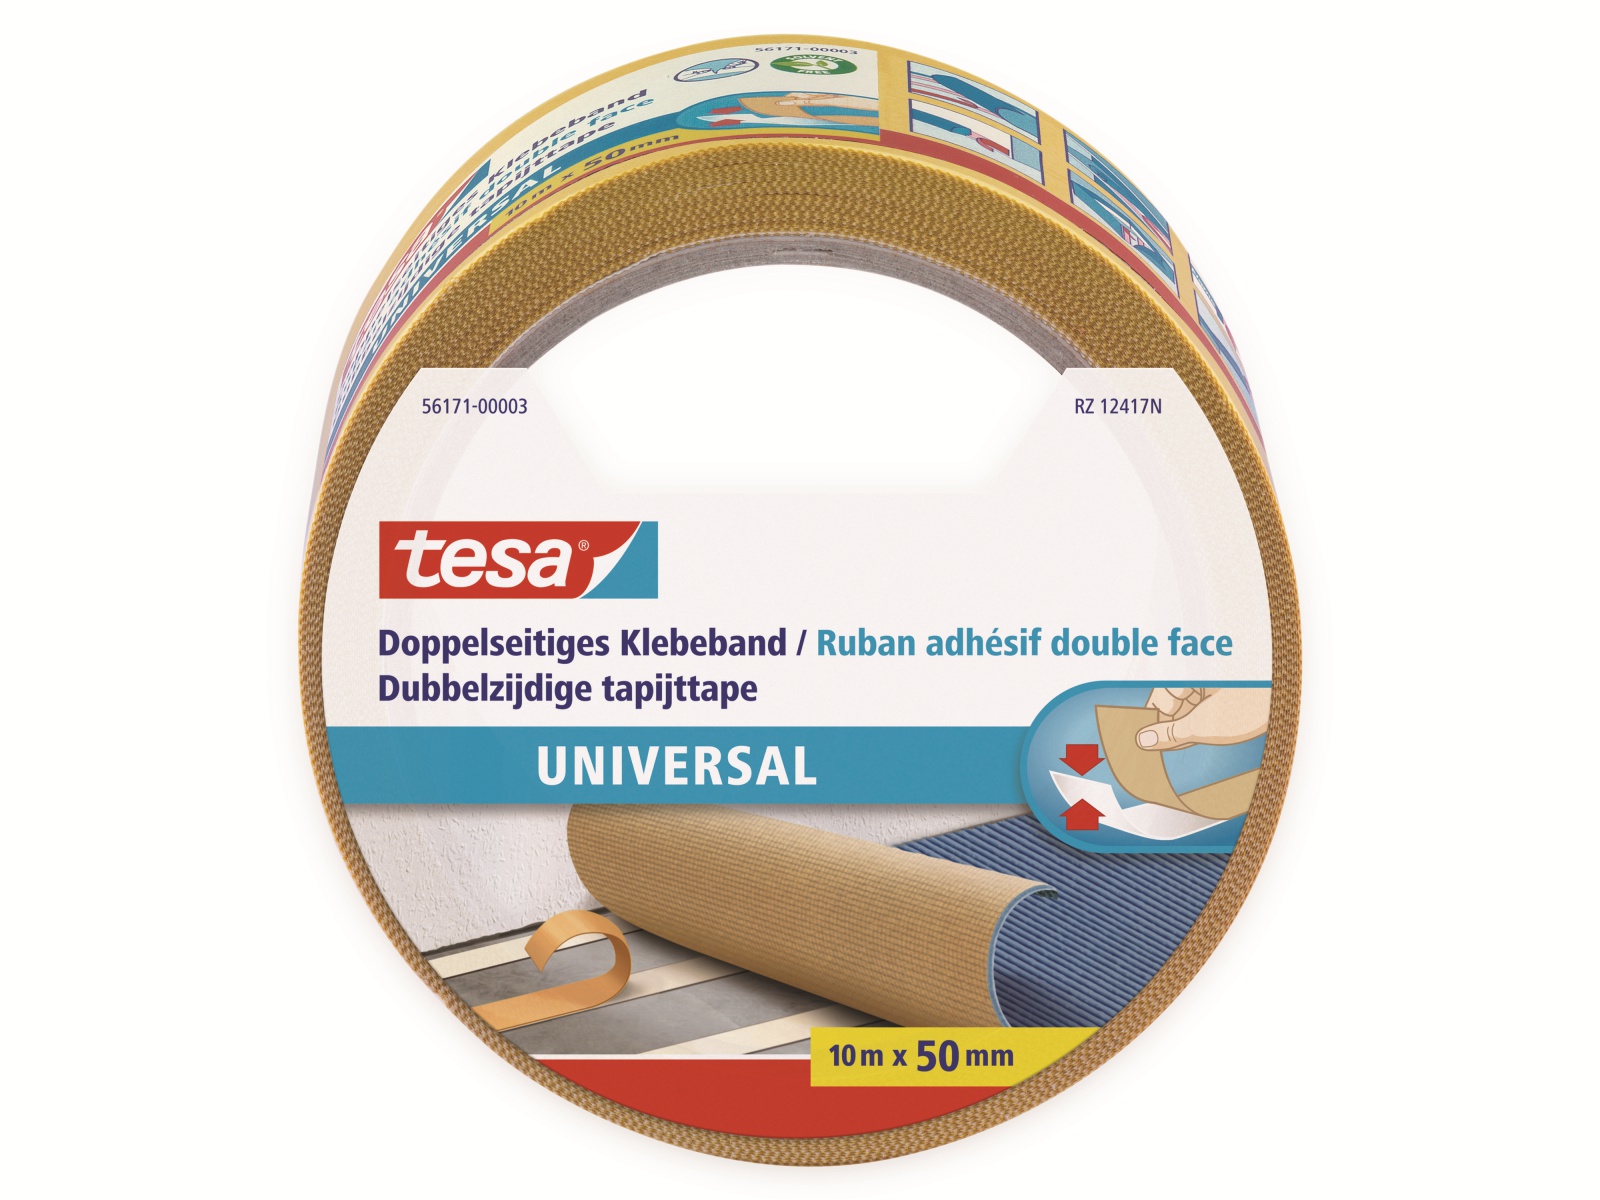 TESA ® Doppelseitiges Klebeband, universal, 10m:50mm, 56171-00003-11